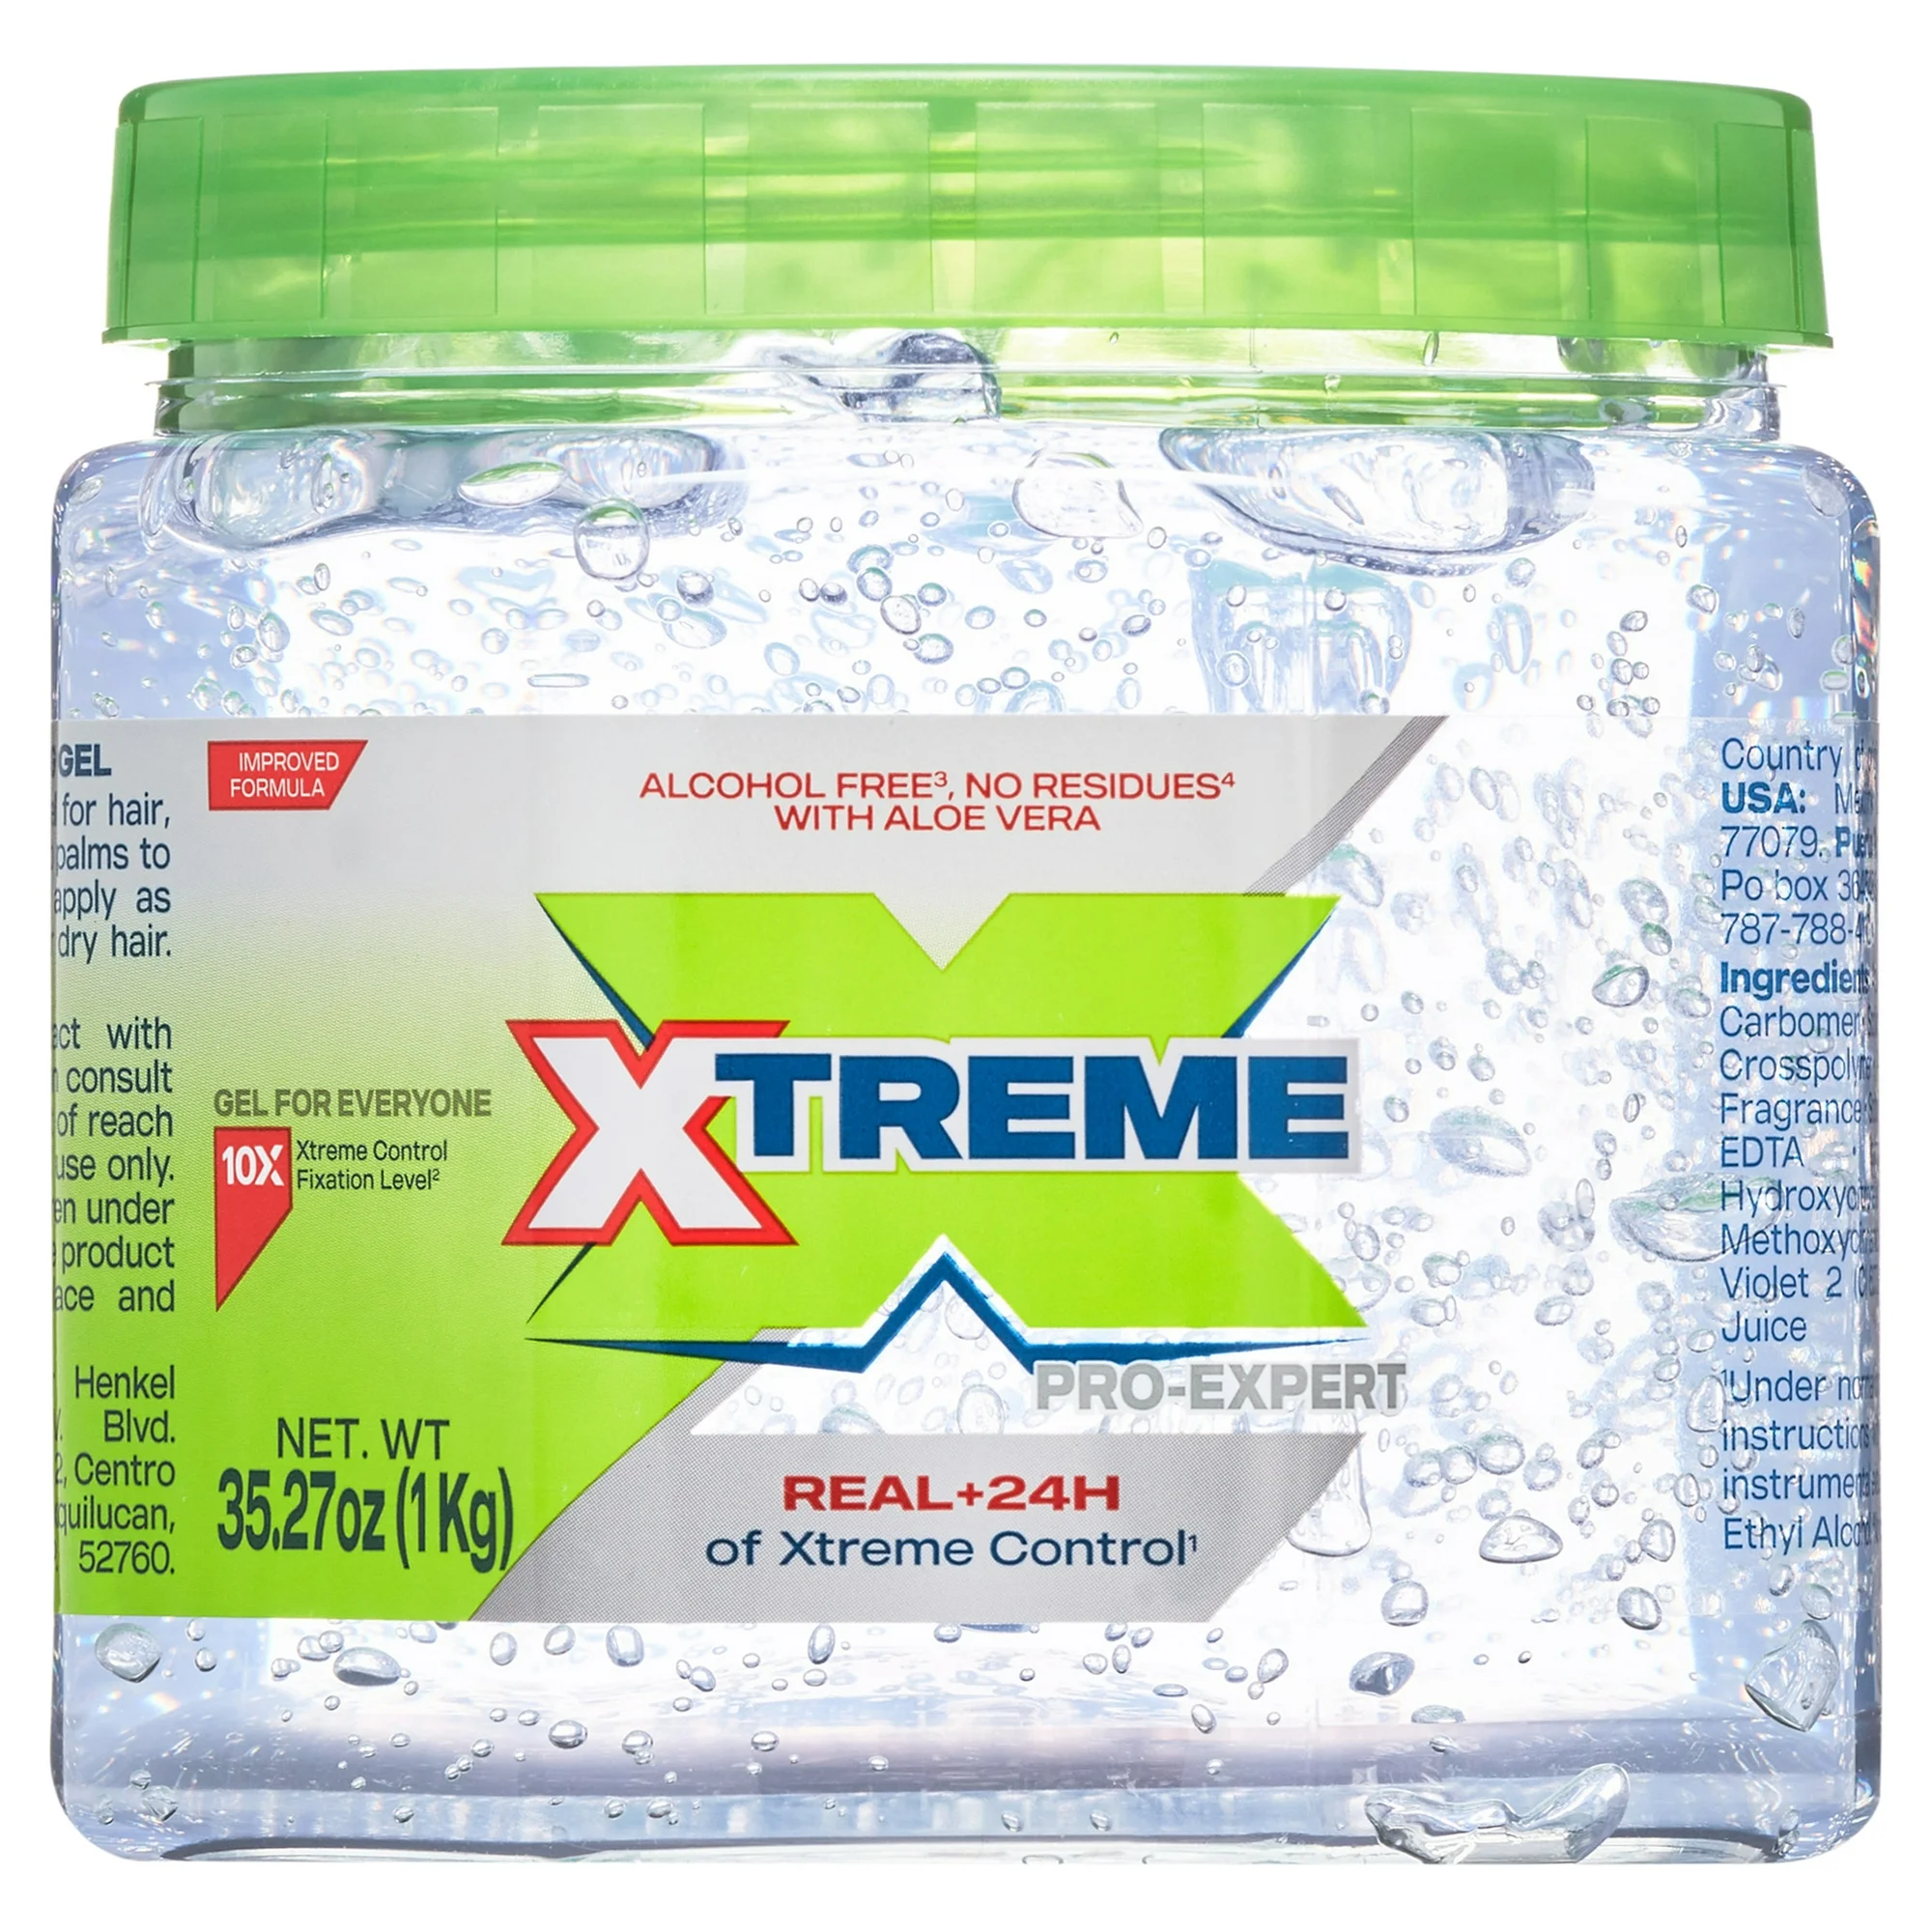 Xtreme-Pro-Expert-Hair-Styling-Gel-Unisex-35-27-oz-Jumbo-Clear-Jar_dc43a685-bb09-48a3-af68-916afaa44020.64e102ea9ef113c8ace6a343b150ad4b